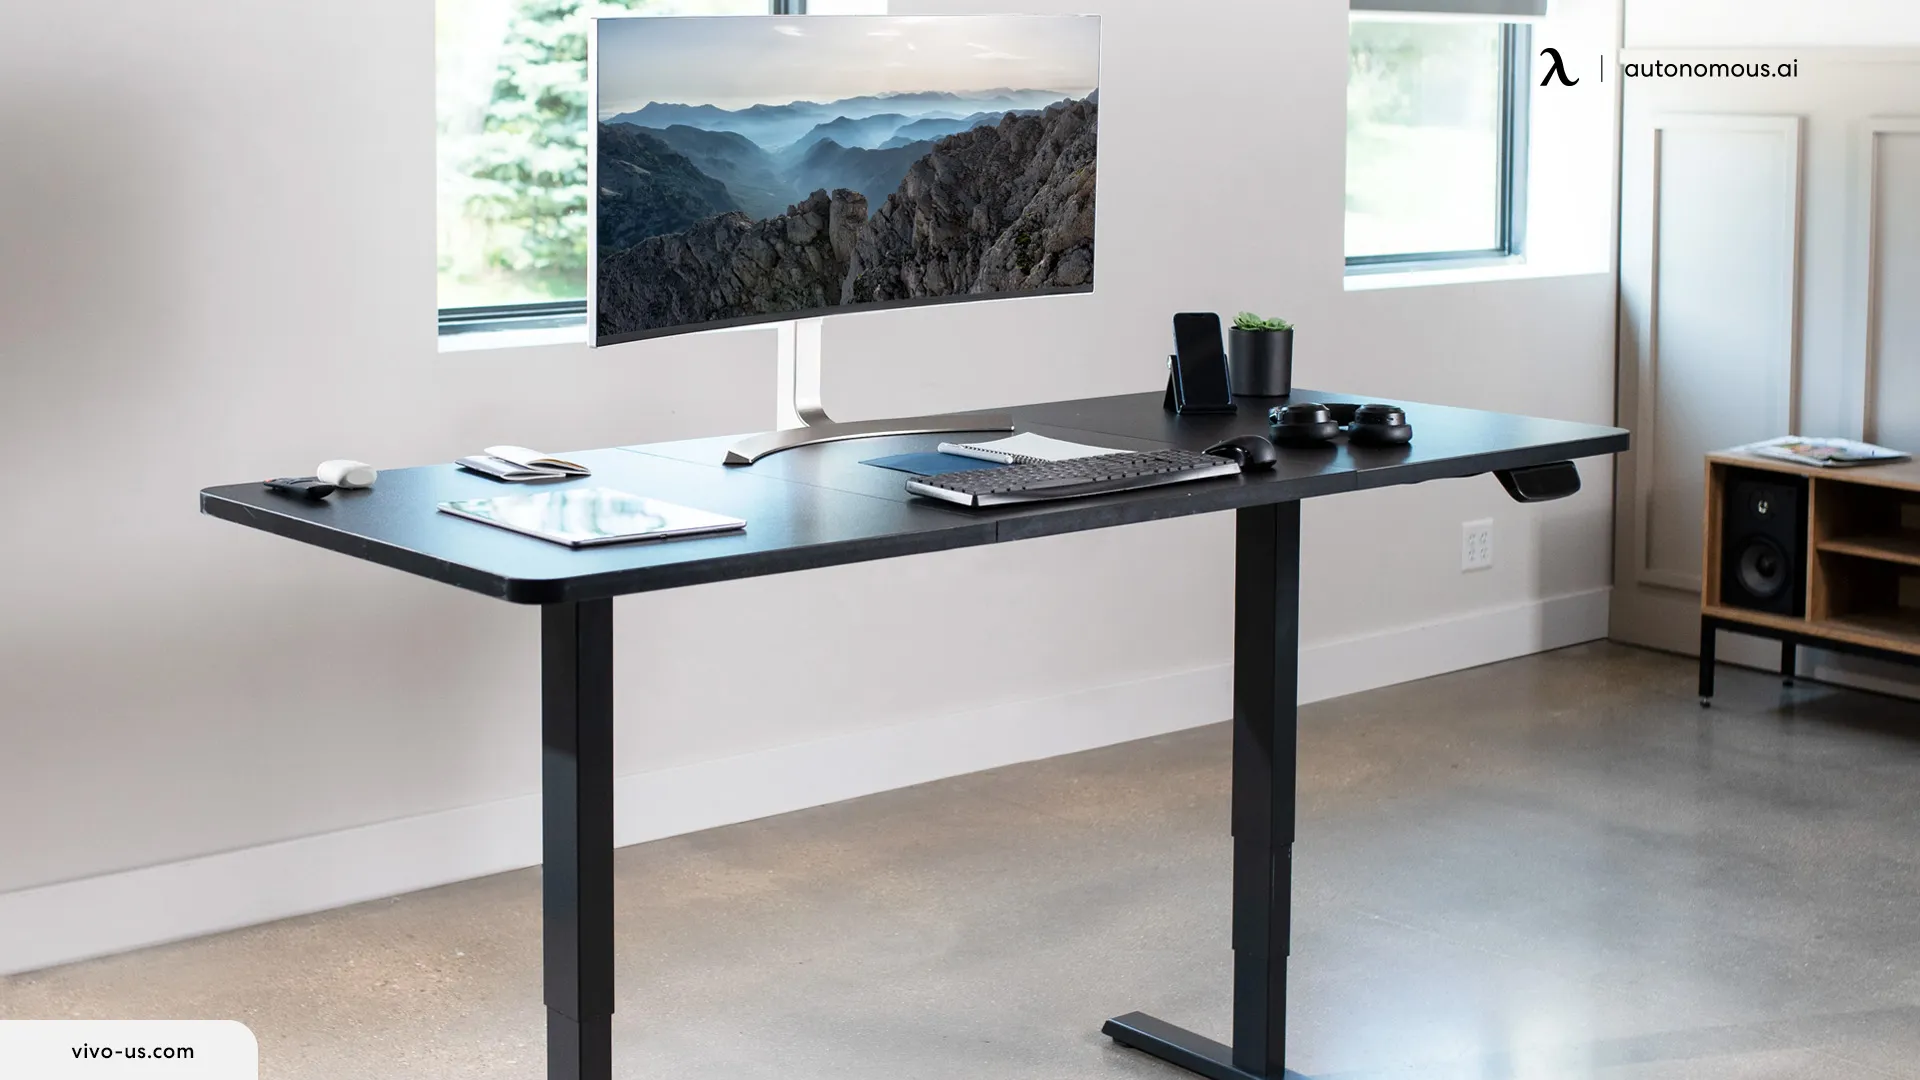 How to Reset Vivo Standing Desk?